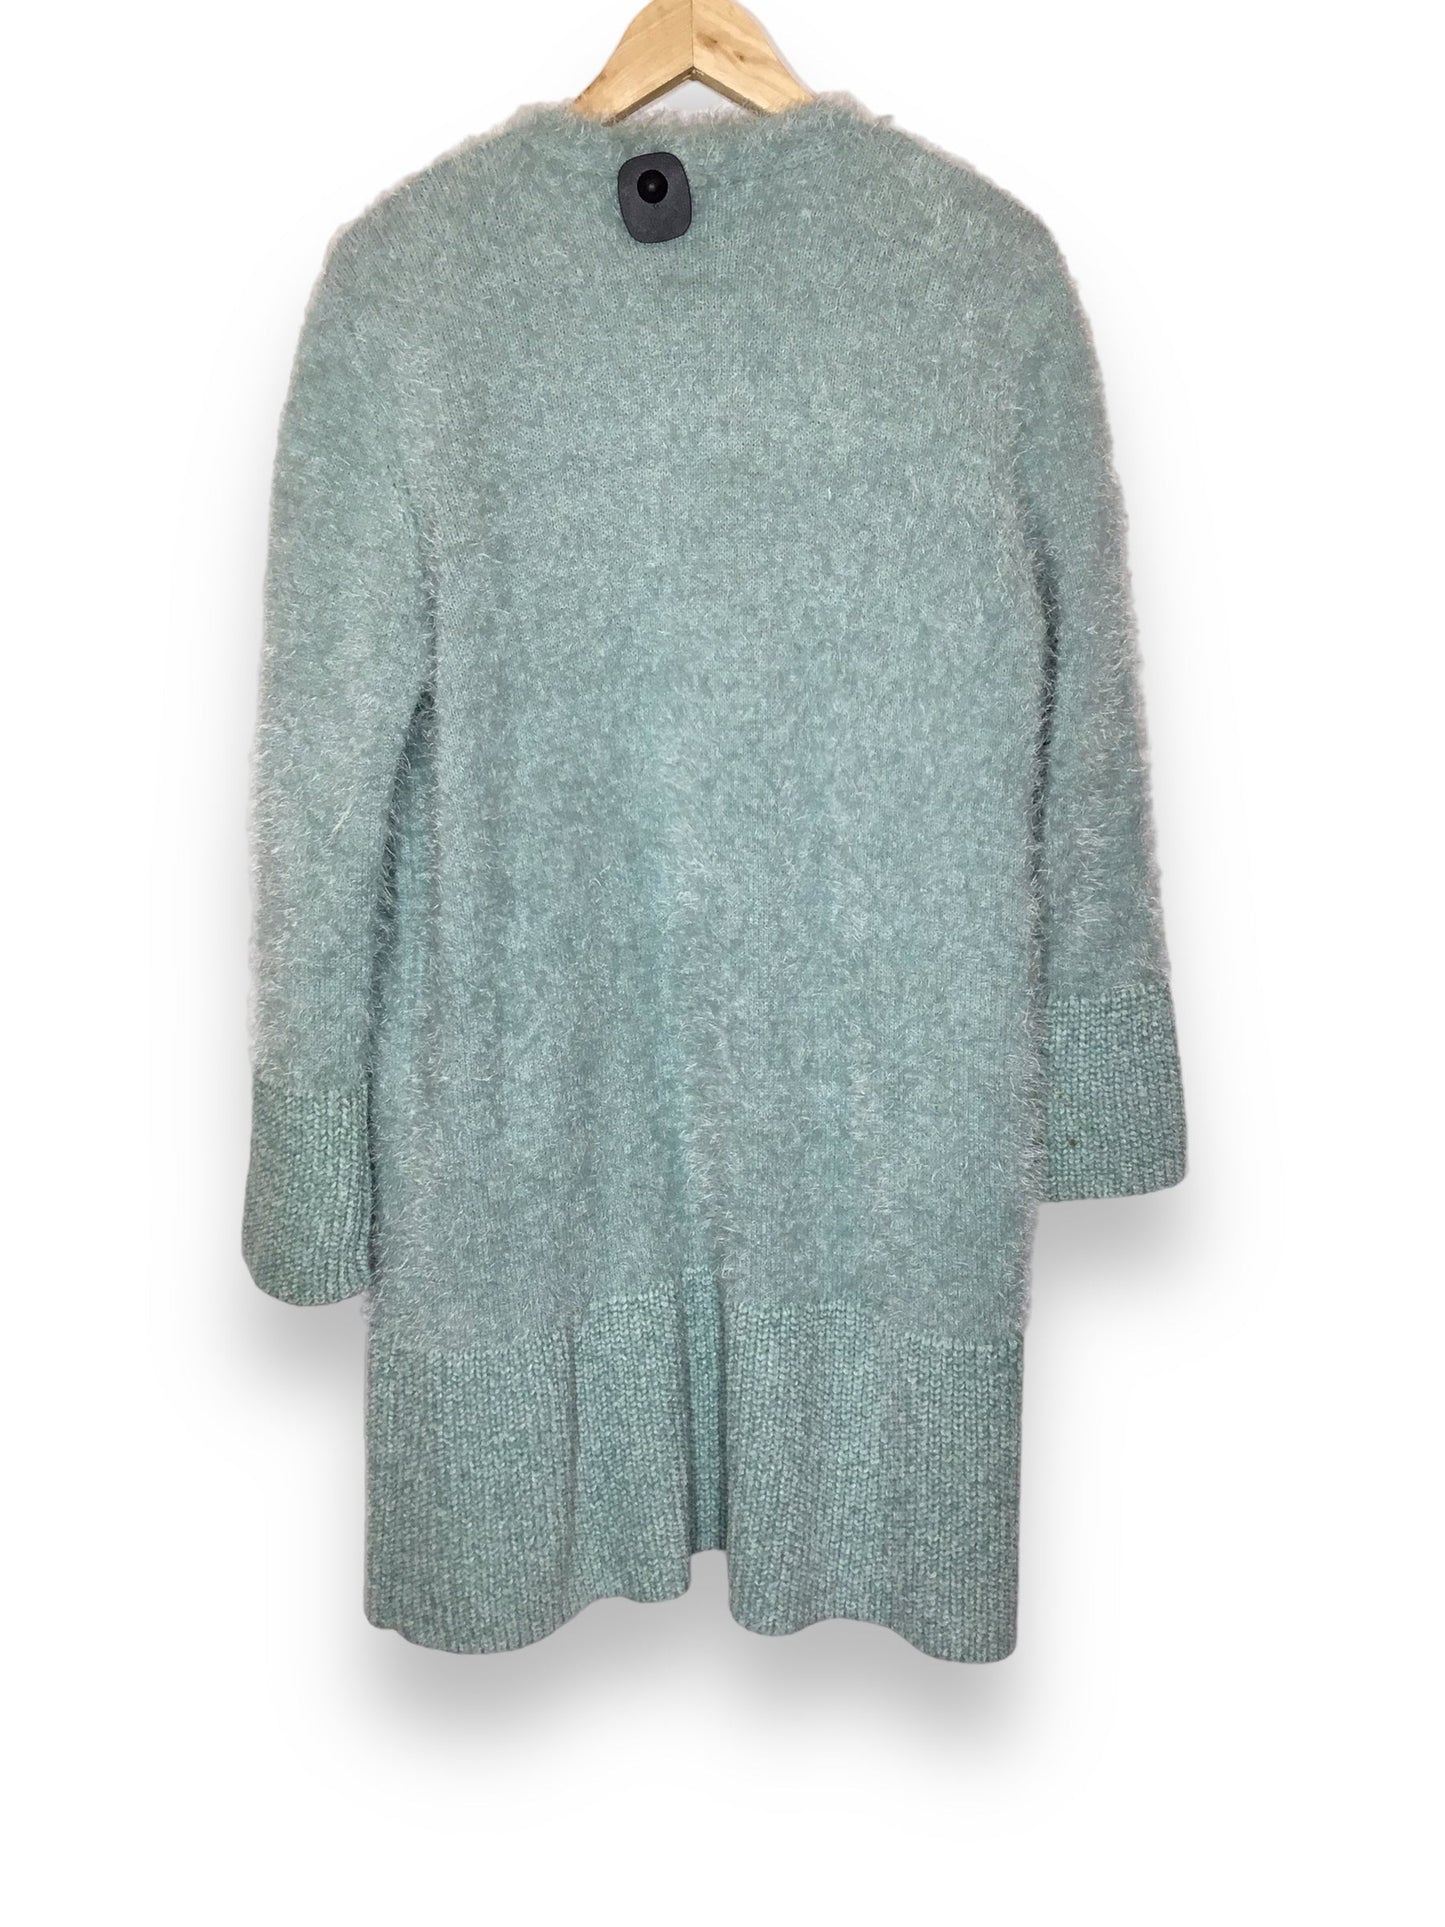 Sweater Cardigan By Massini  Size: Xl